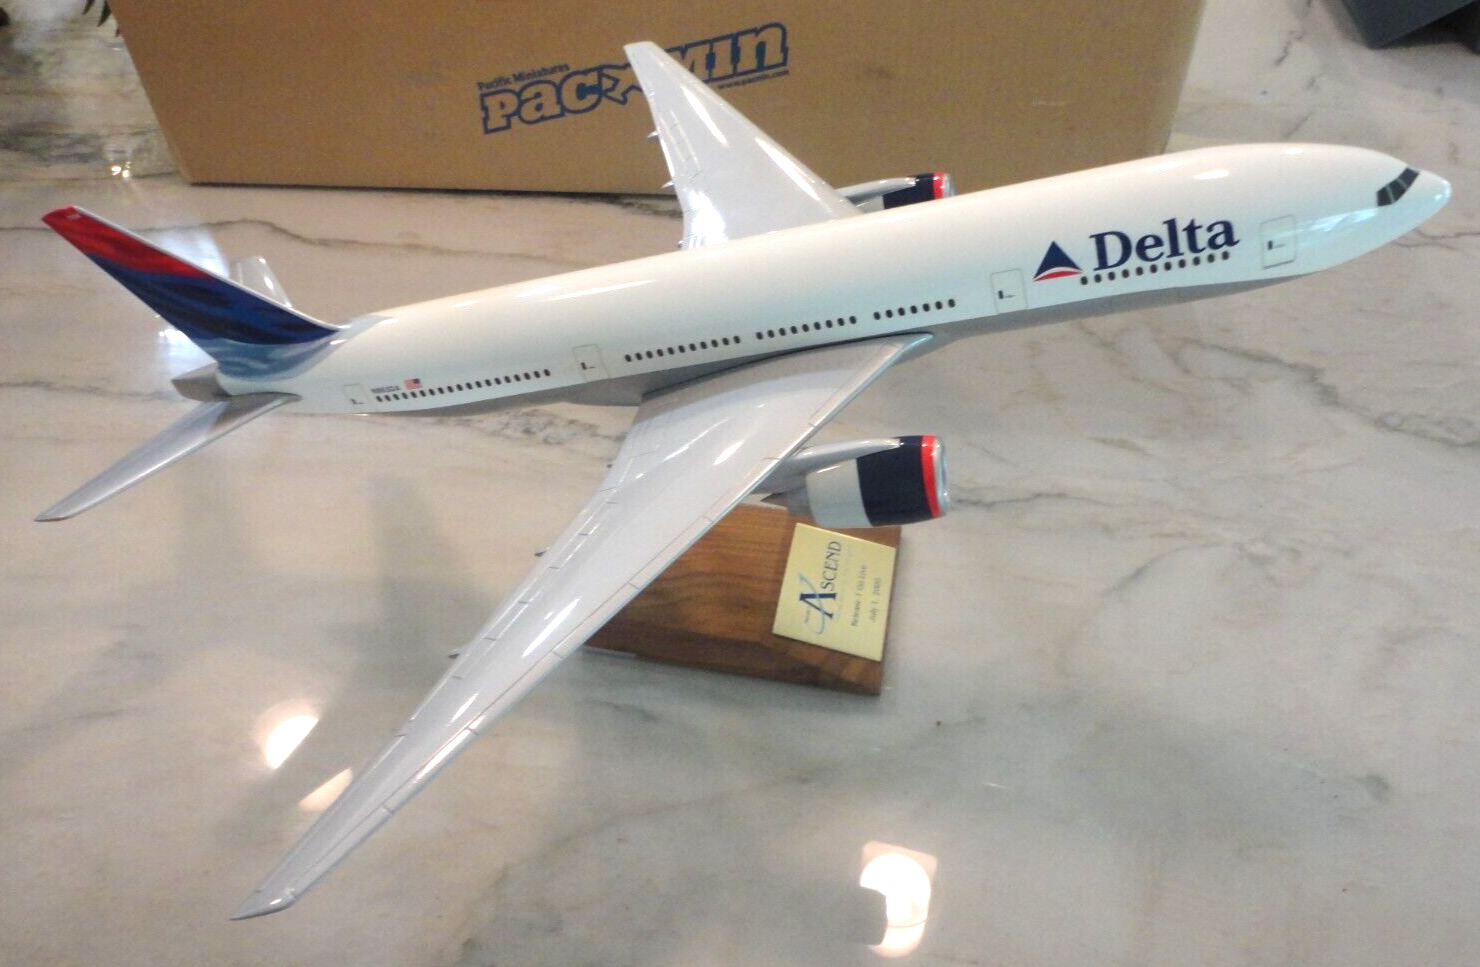 Delta Airlines Boeing 777-200 - PACMIN Desktop Model 1/100 Scale BIG RESIN MODEL